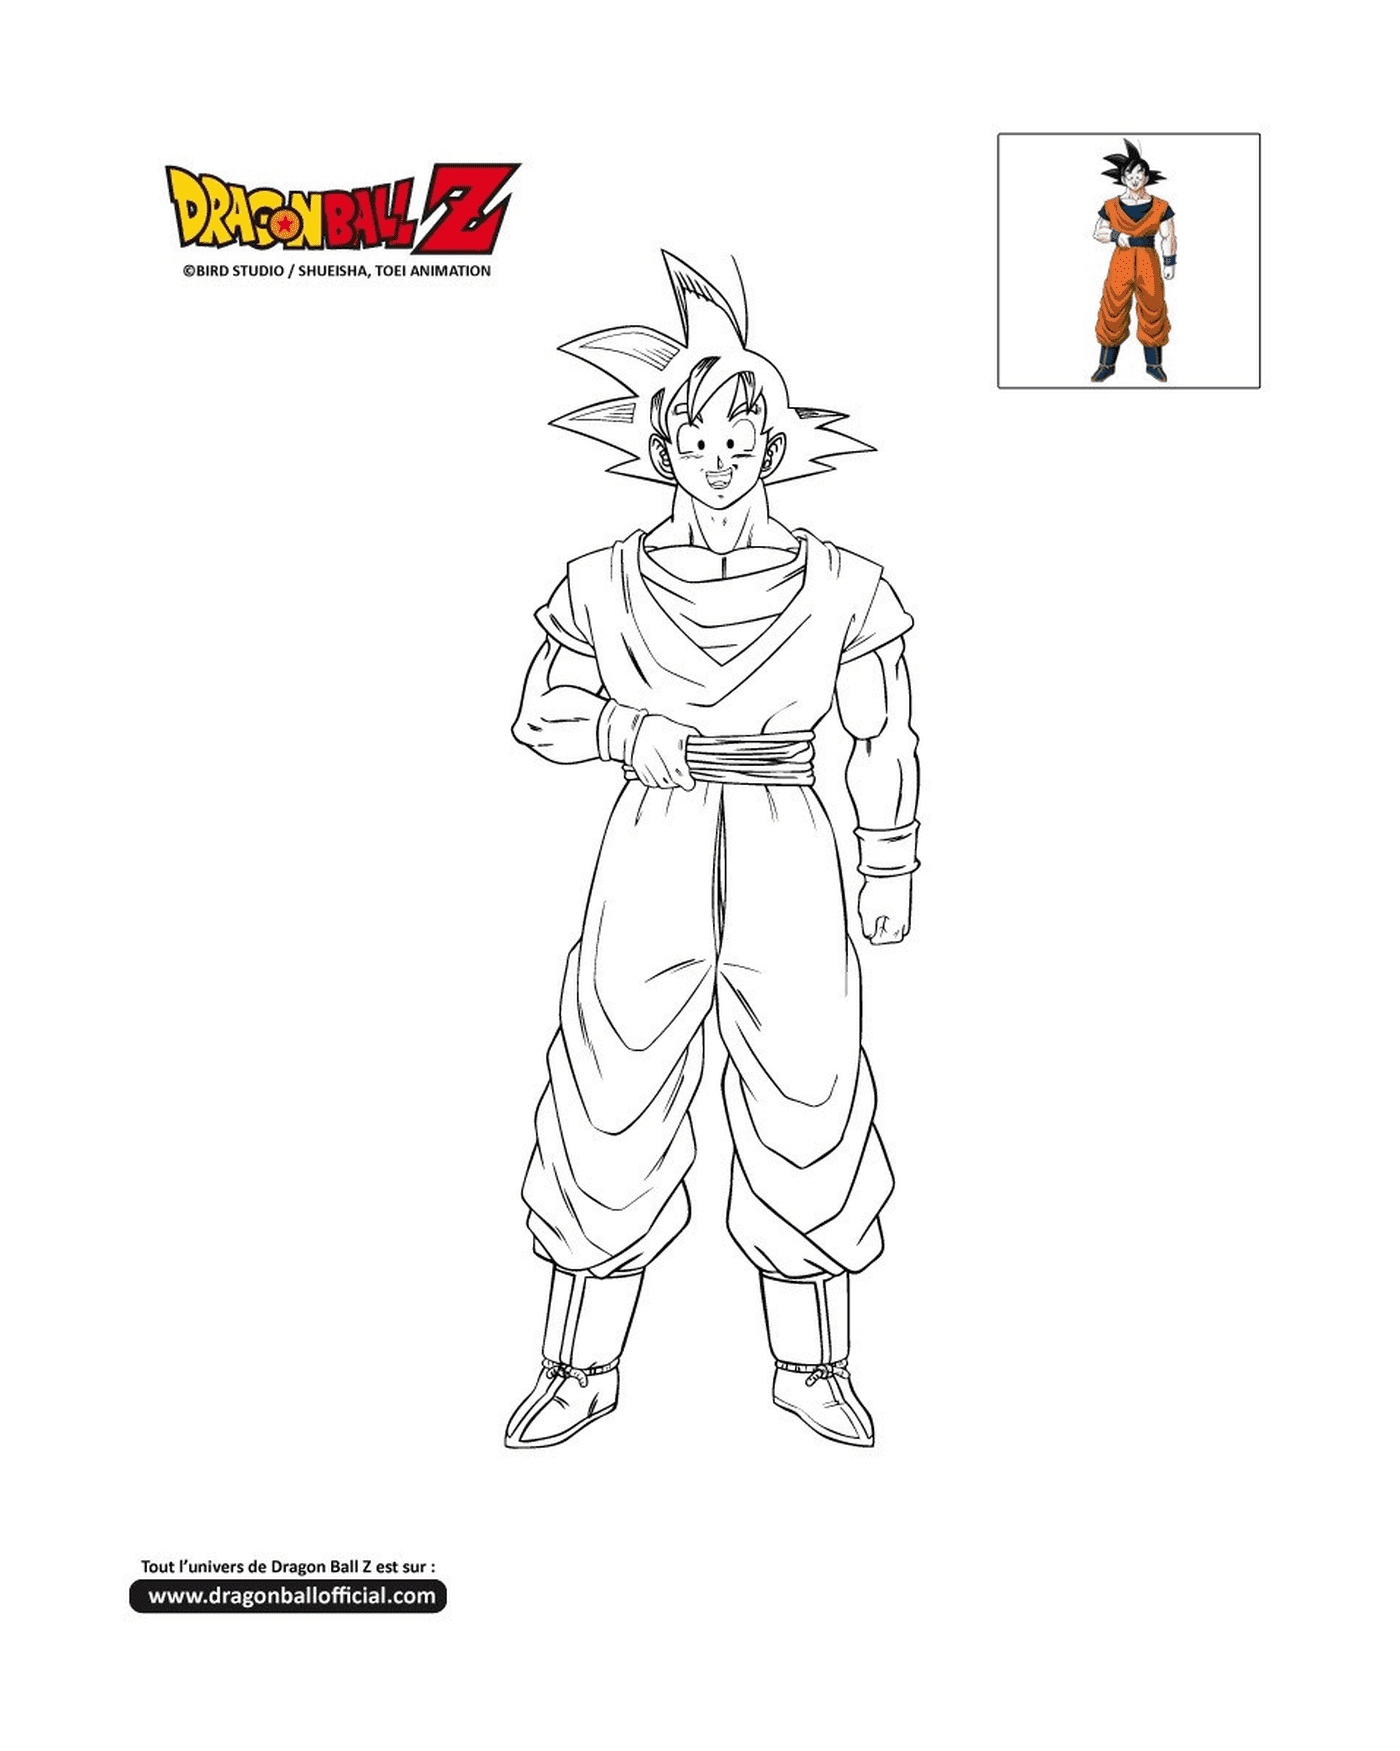  Goku, un uomo vestito da Dragon Ball Z 